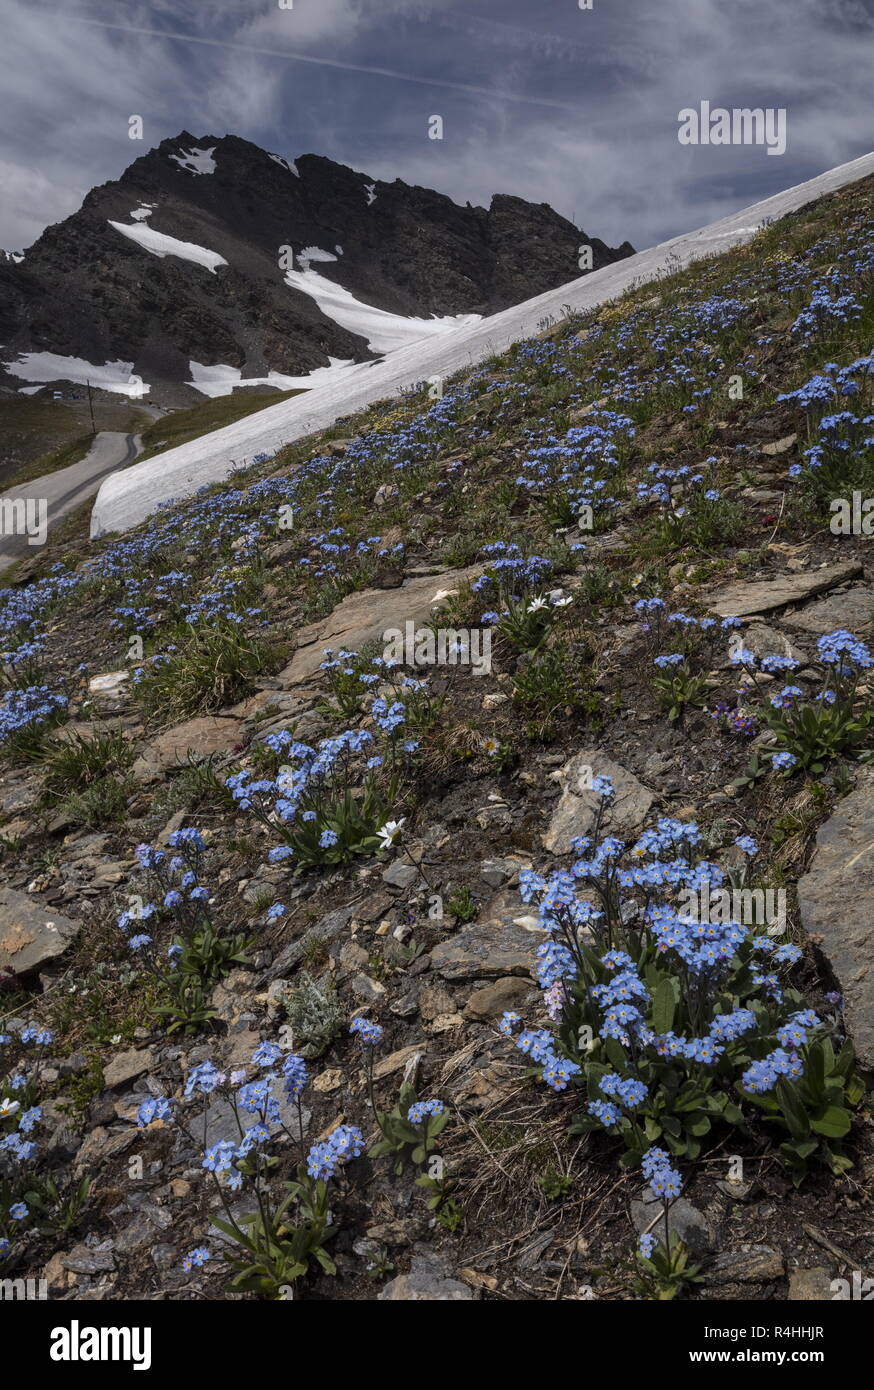 Alpine forget-me-not, Myosotis alpestris in flower in the Vanoise National Park, French Alps. Stock Photo